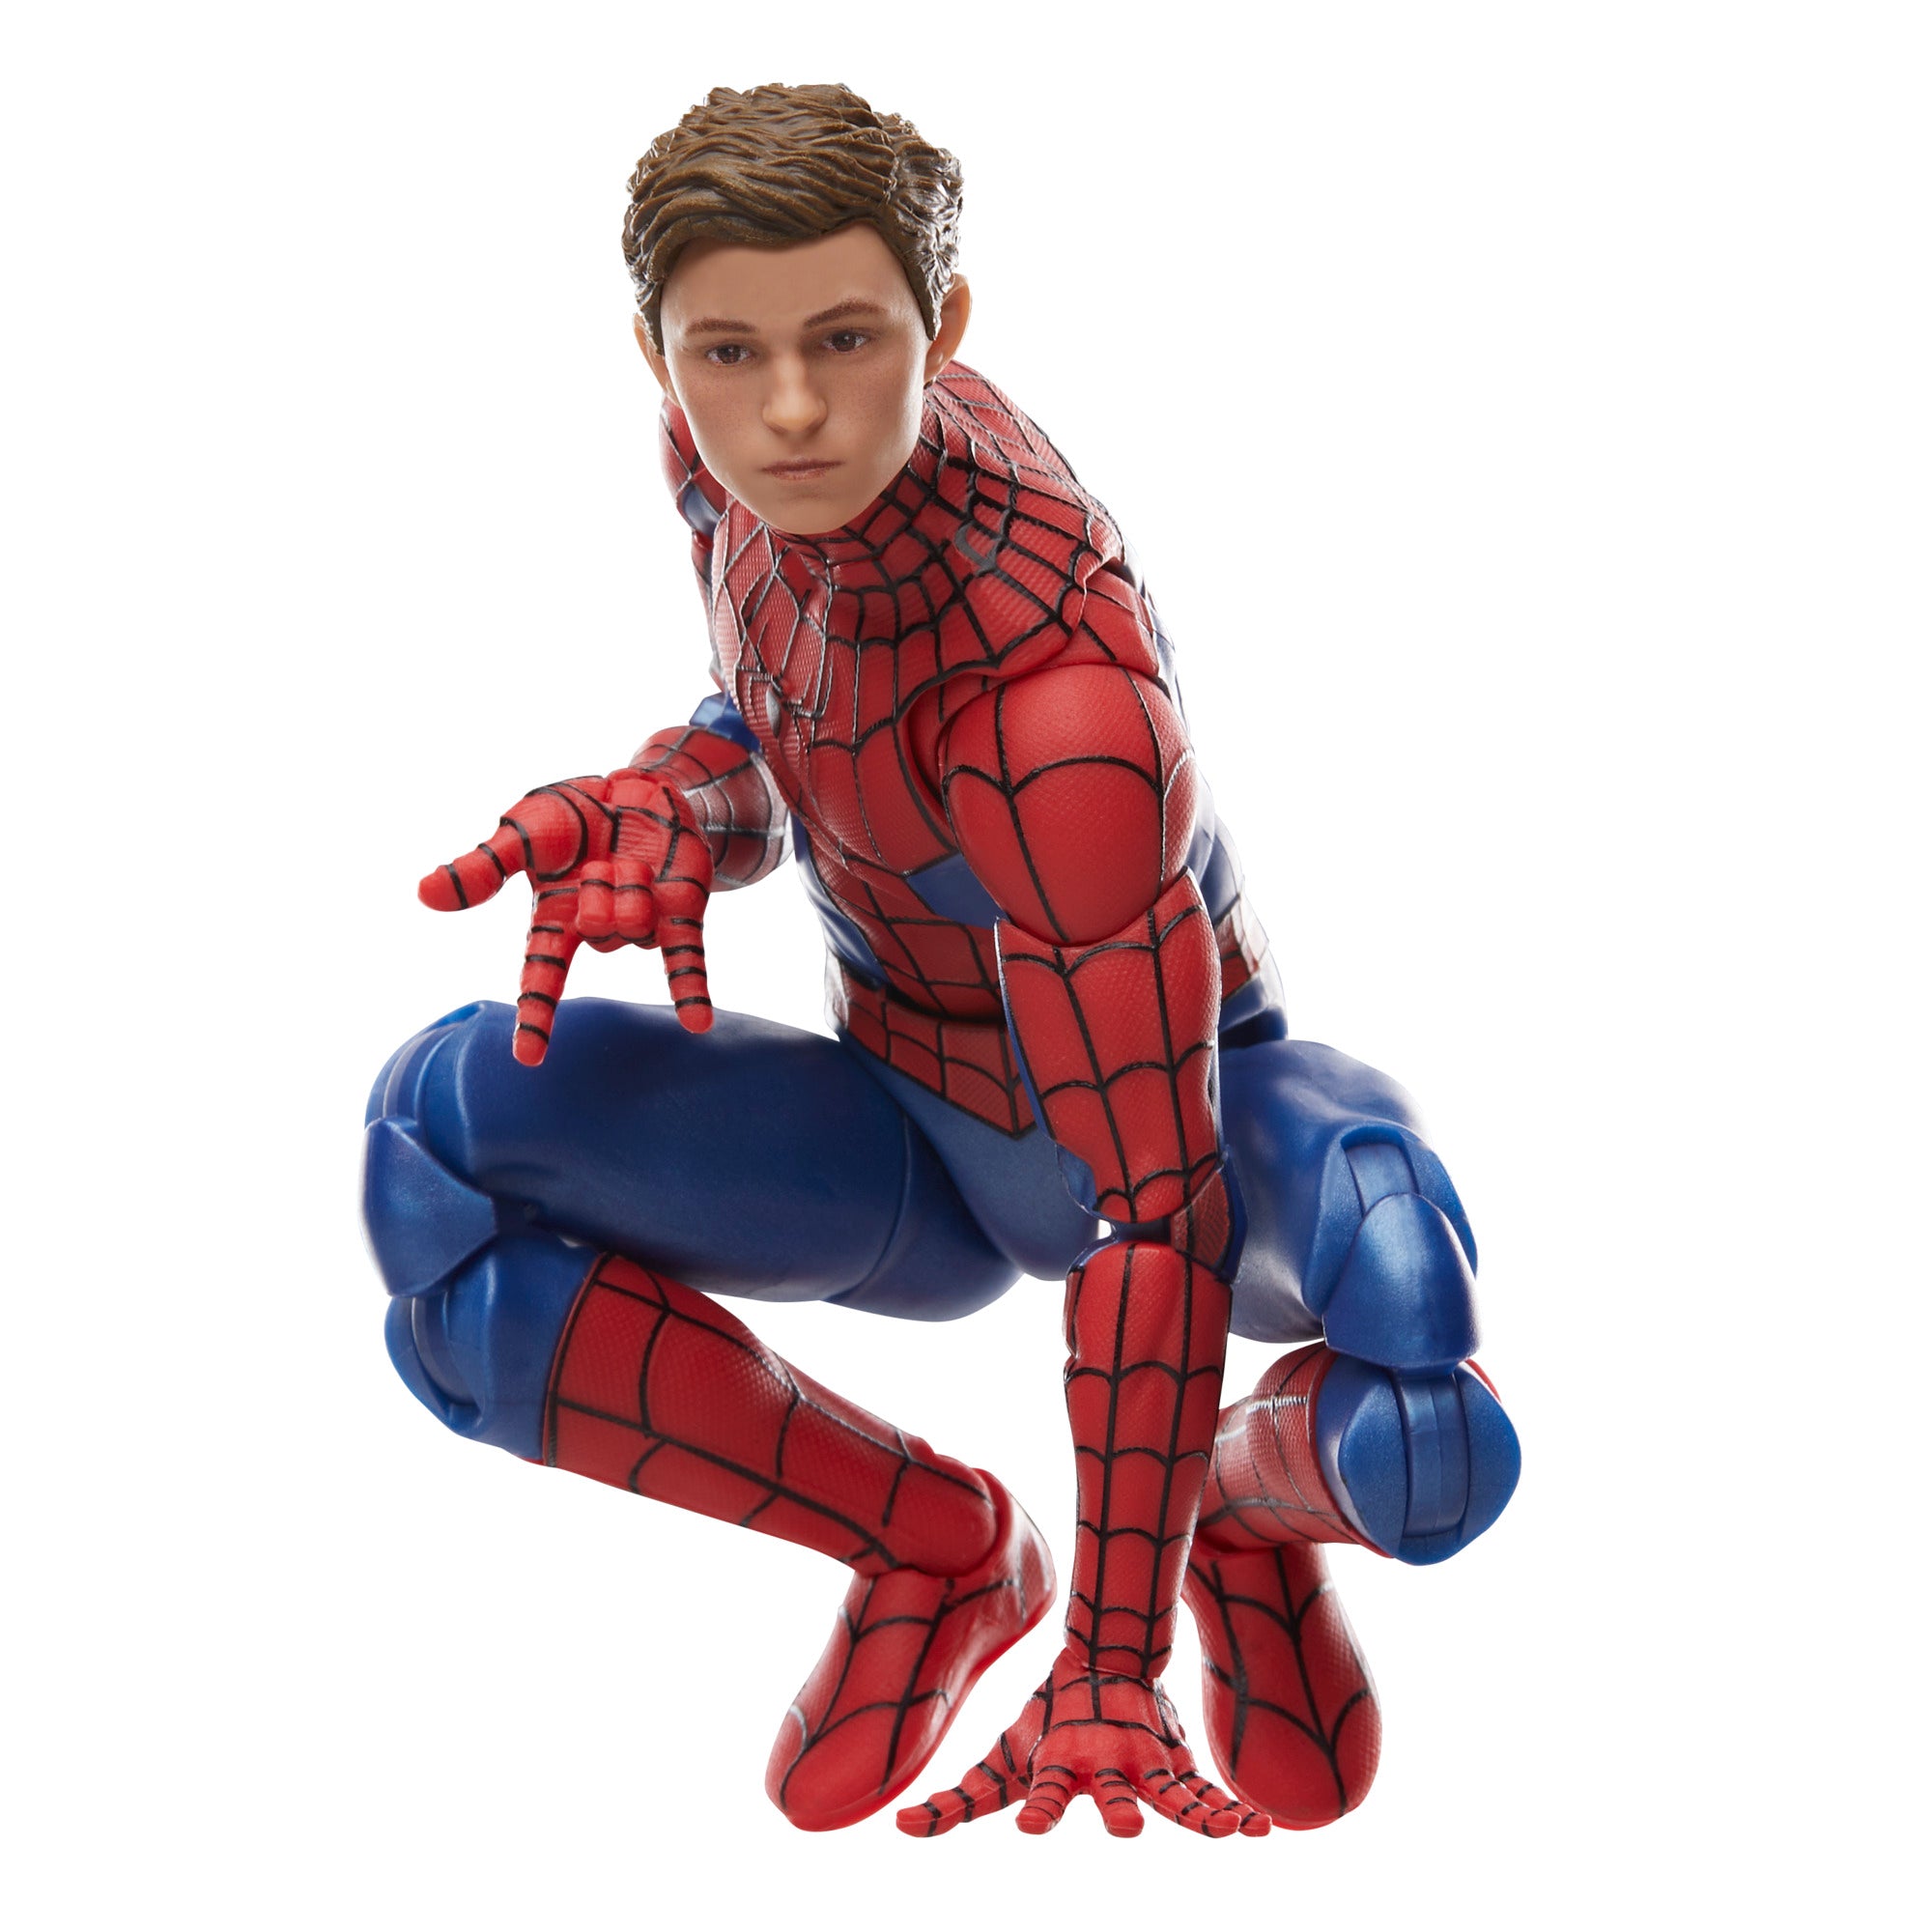 Spider-Man 2 Marvel Legends Gamerverse Action Figurine Spider-Man 15cm